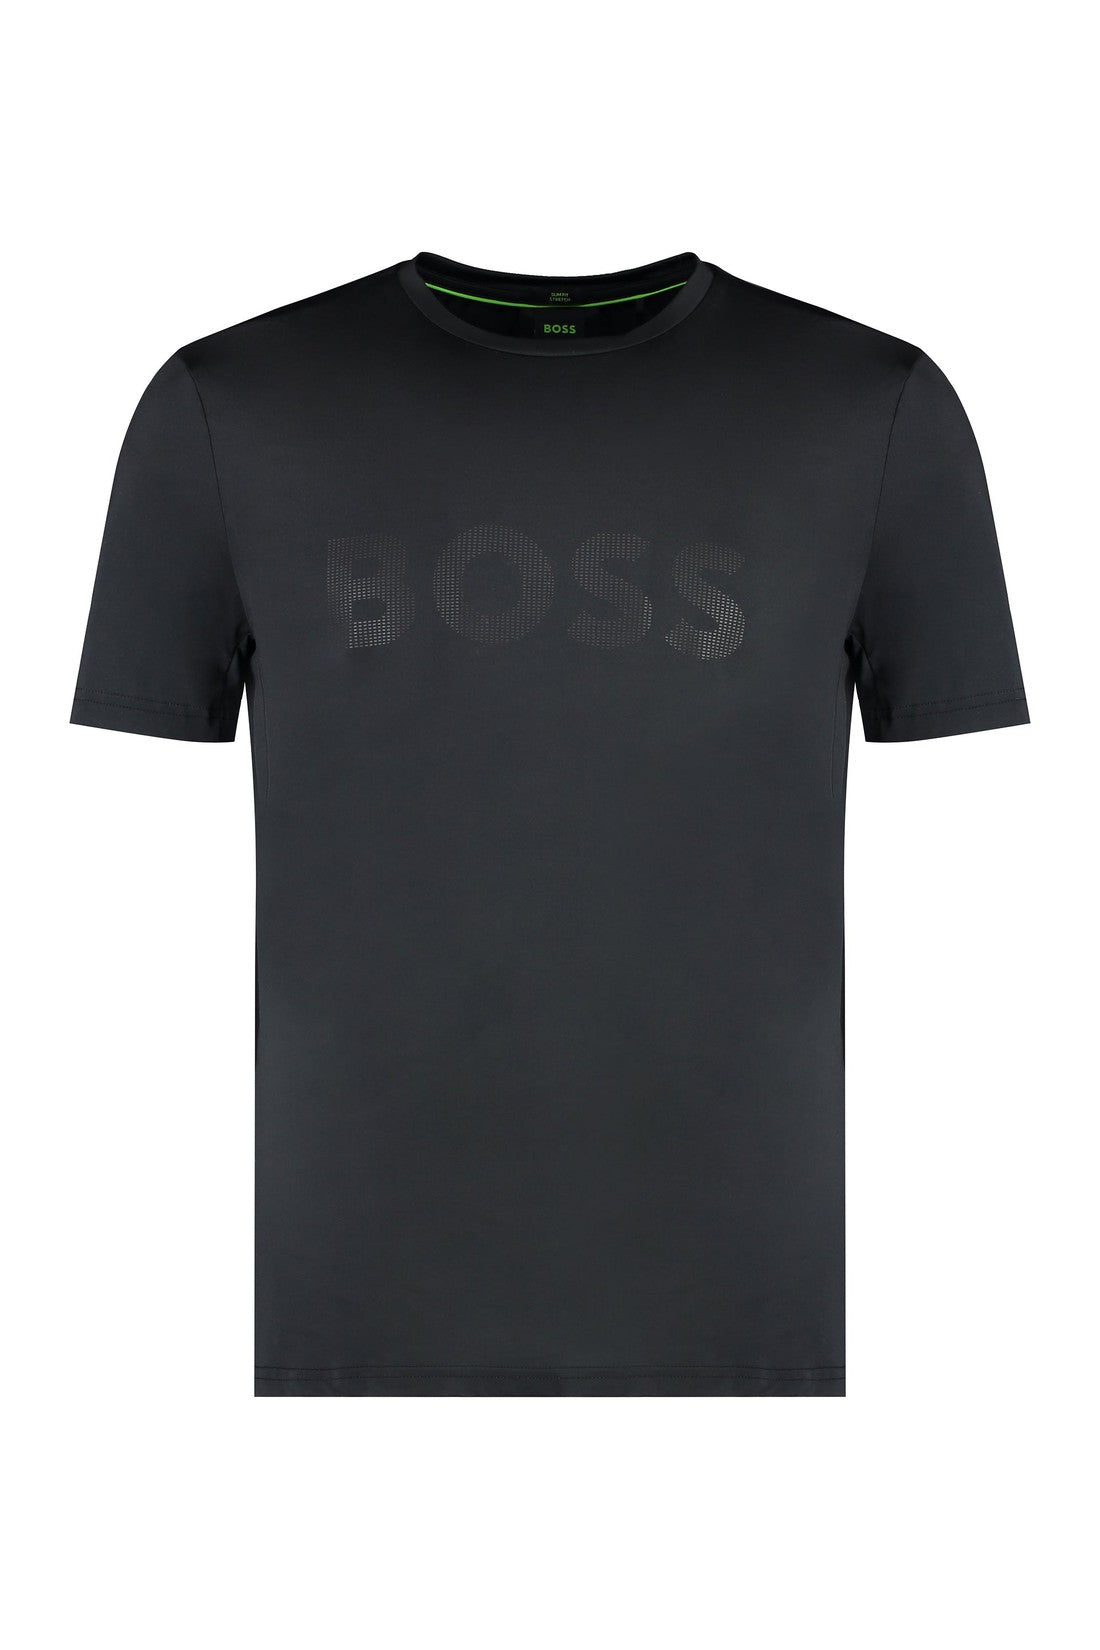 BOSS-OUTLET-SALE-Techno fabric t-shirt-ARCHIVIST